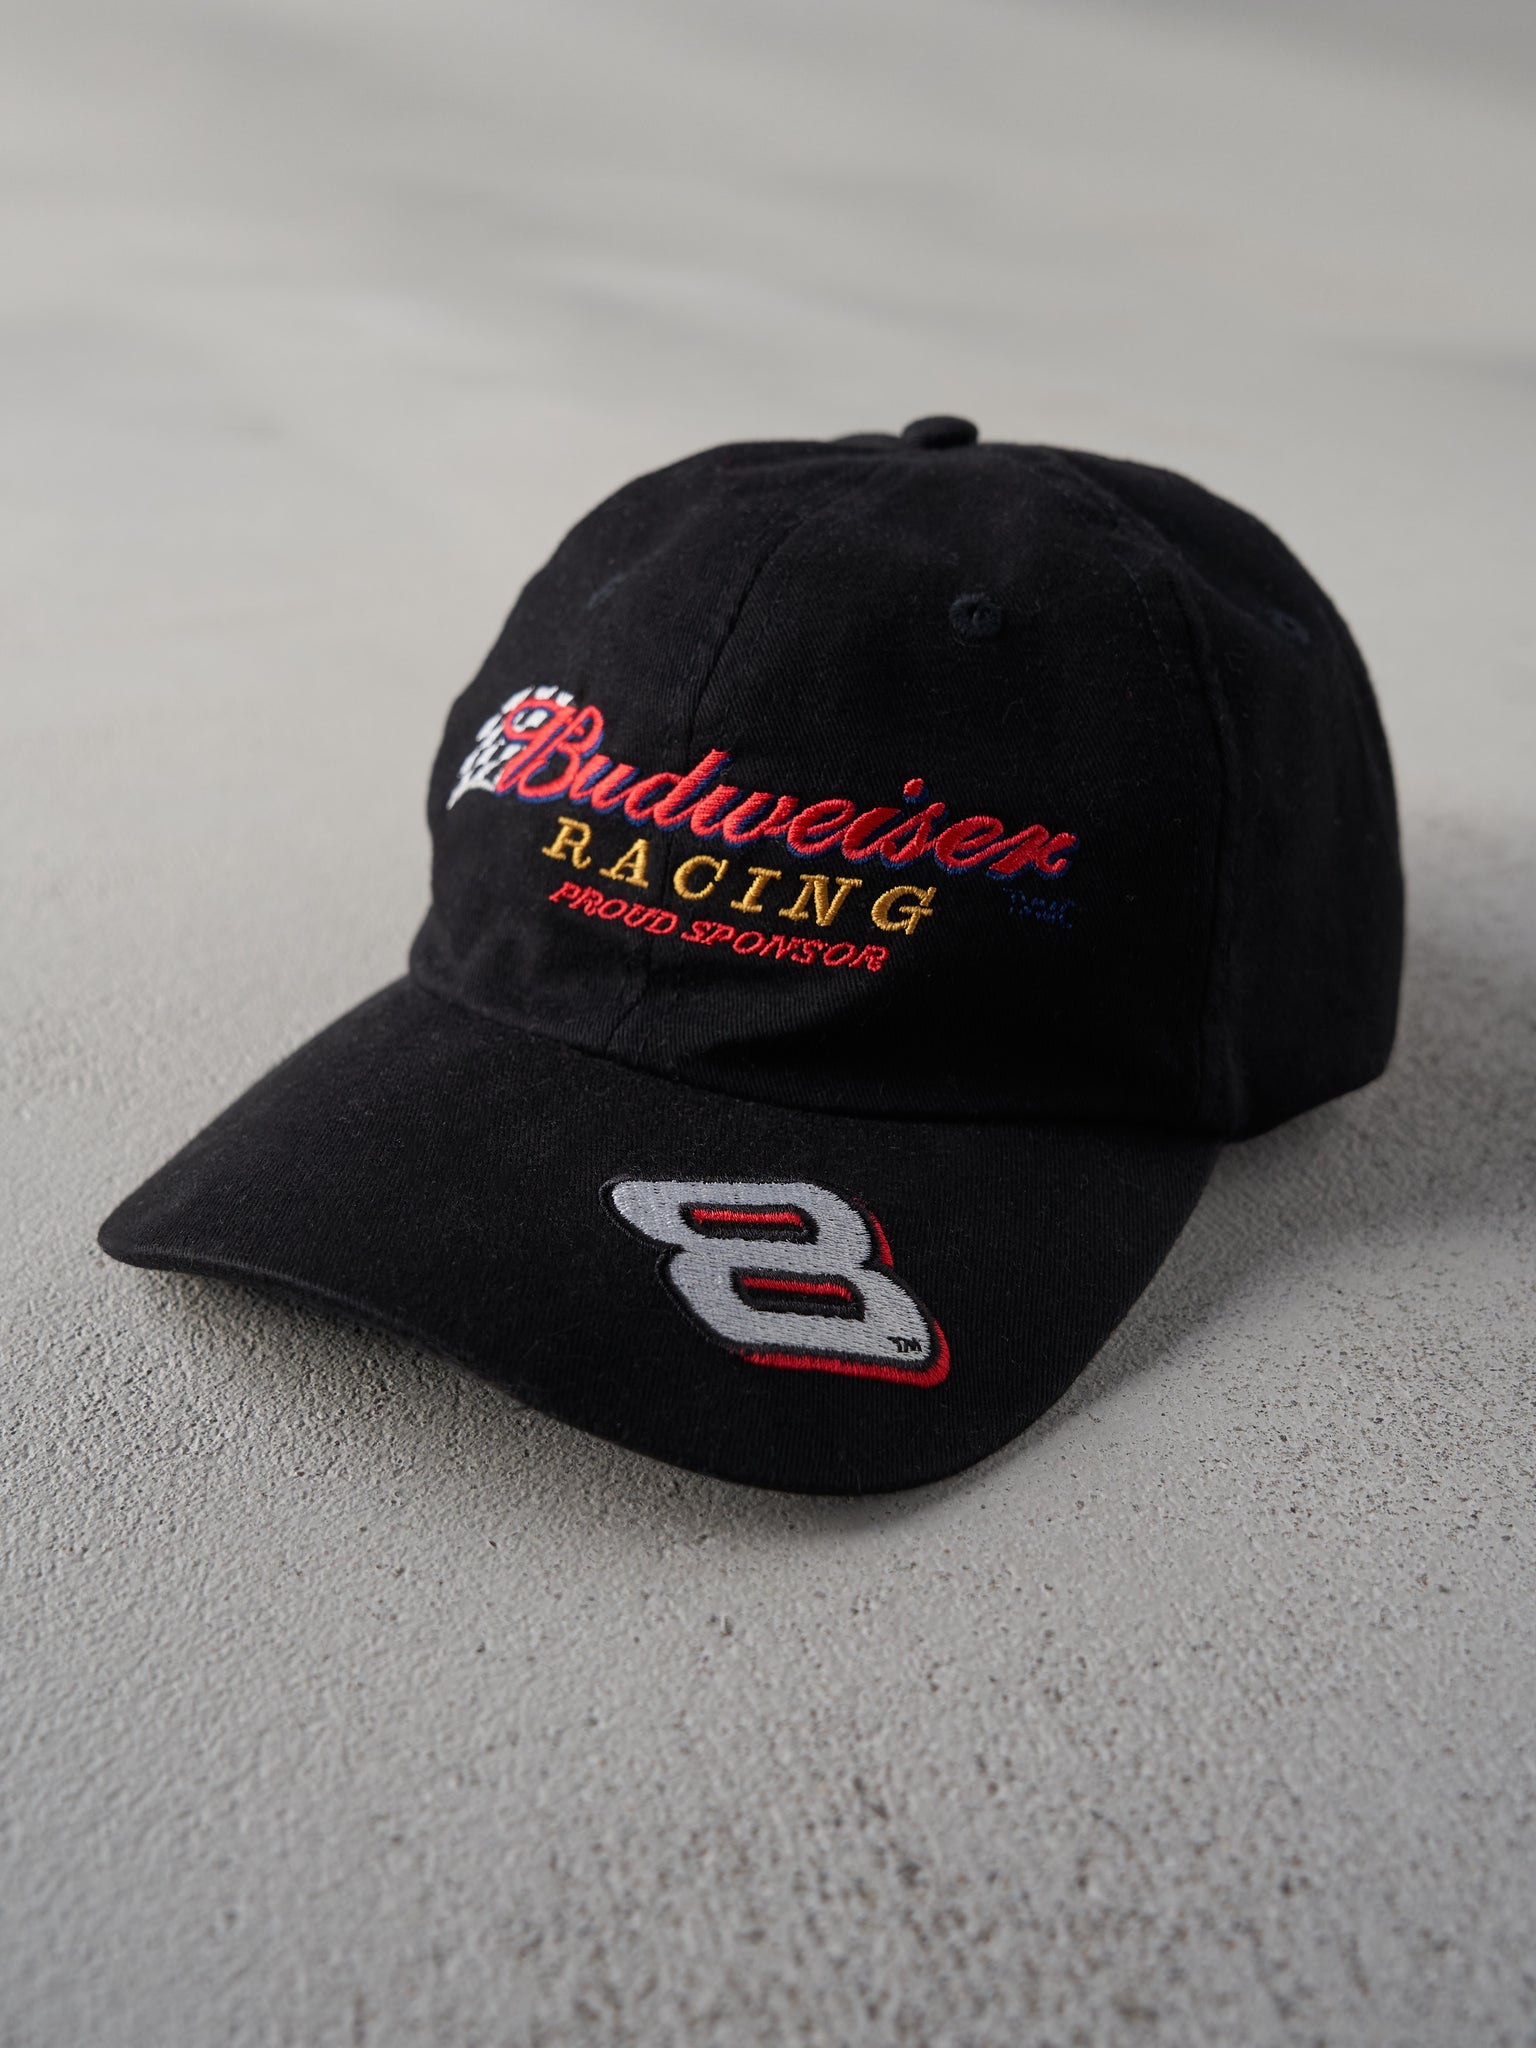 Vintage Black Dale Jr Budweiser Racing Hat